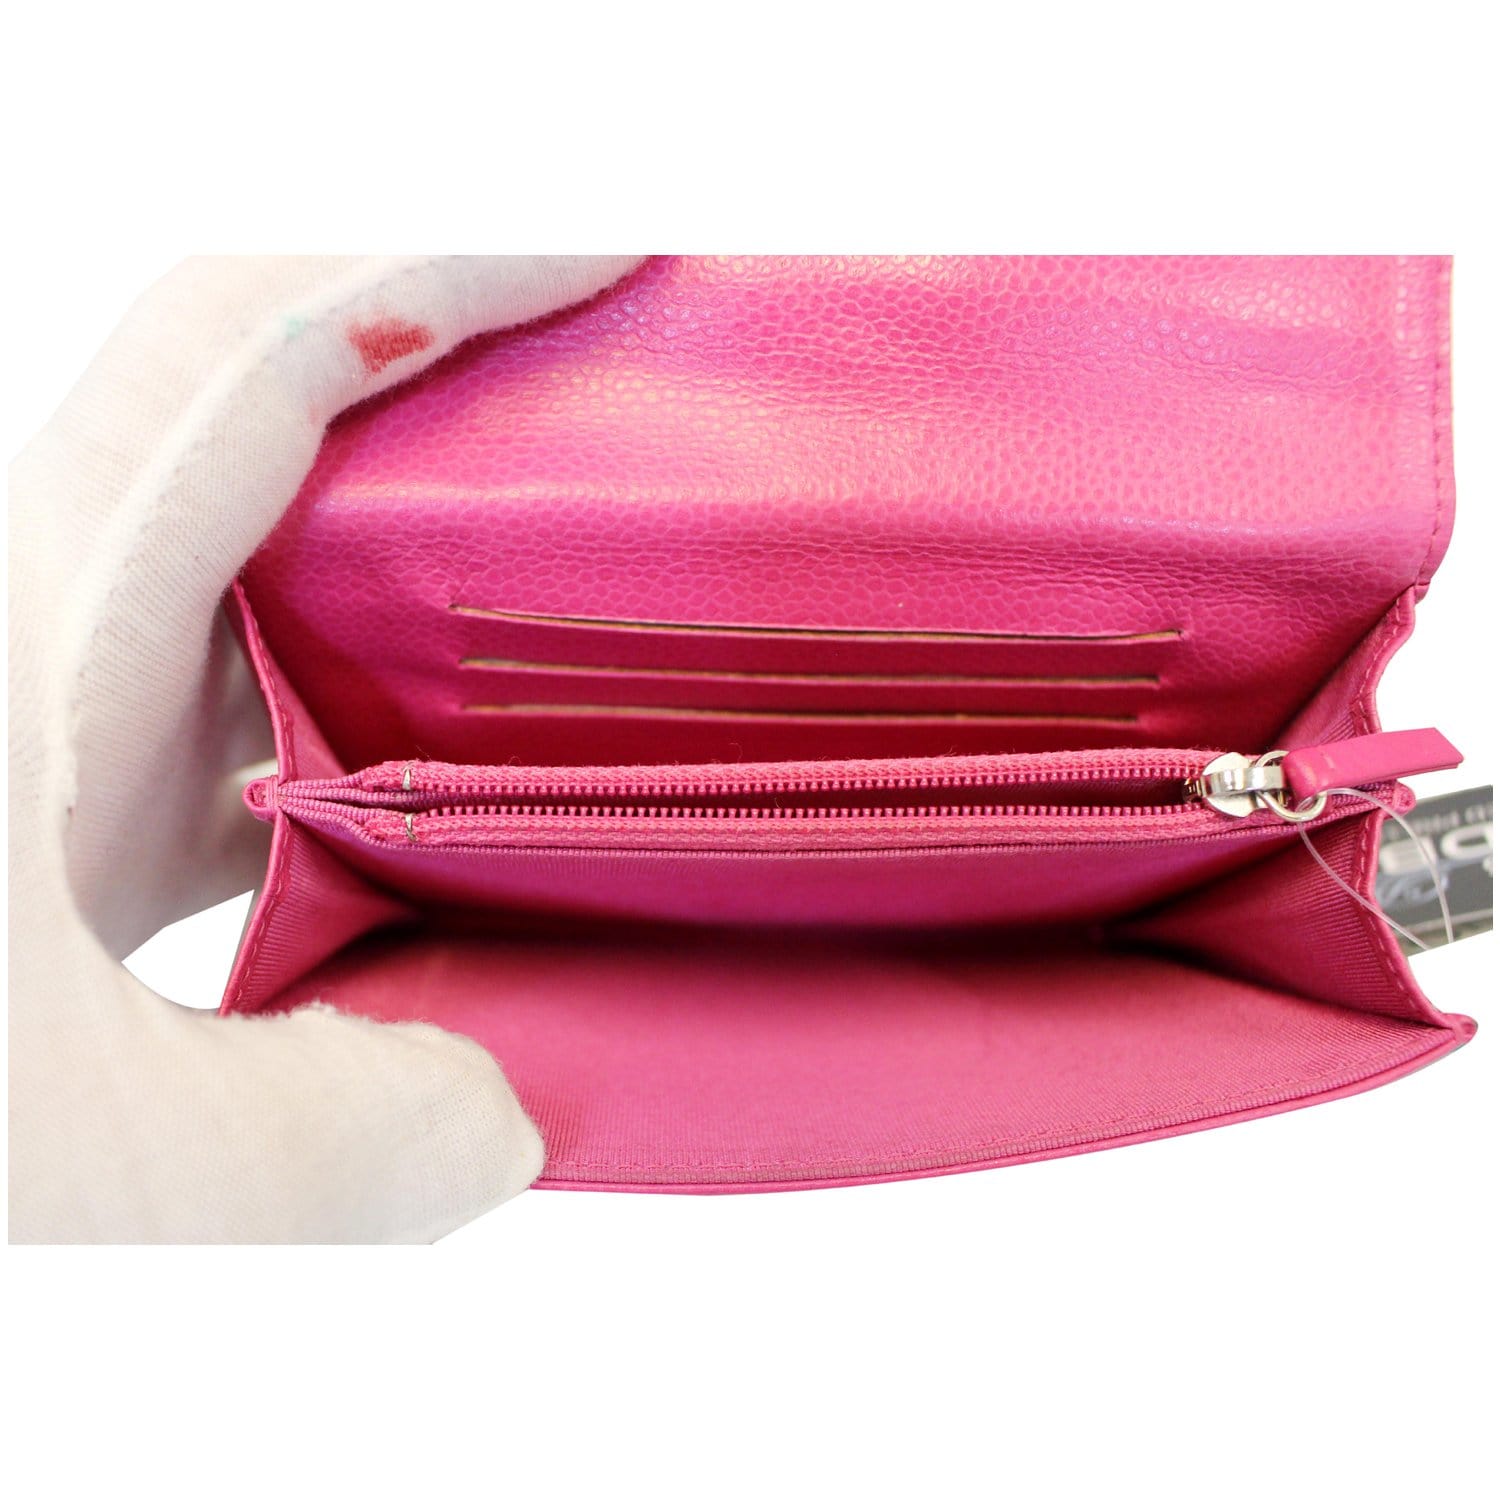 Chanel Pre-owned 2019 Medium Double Flap Shoulder Bag - Pink